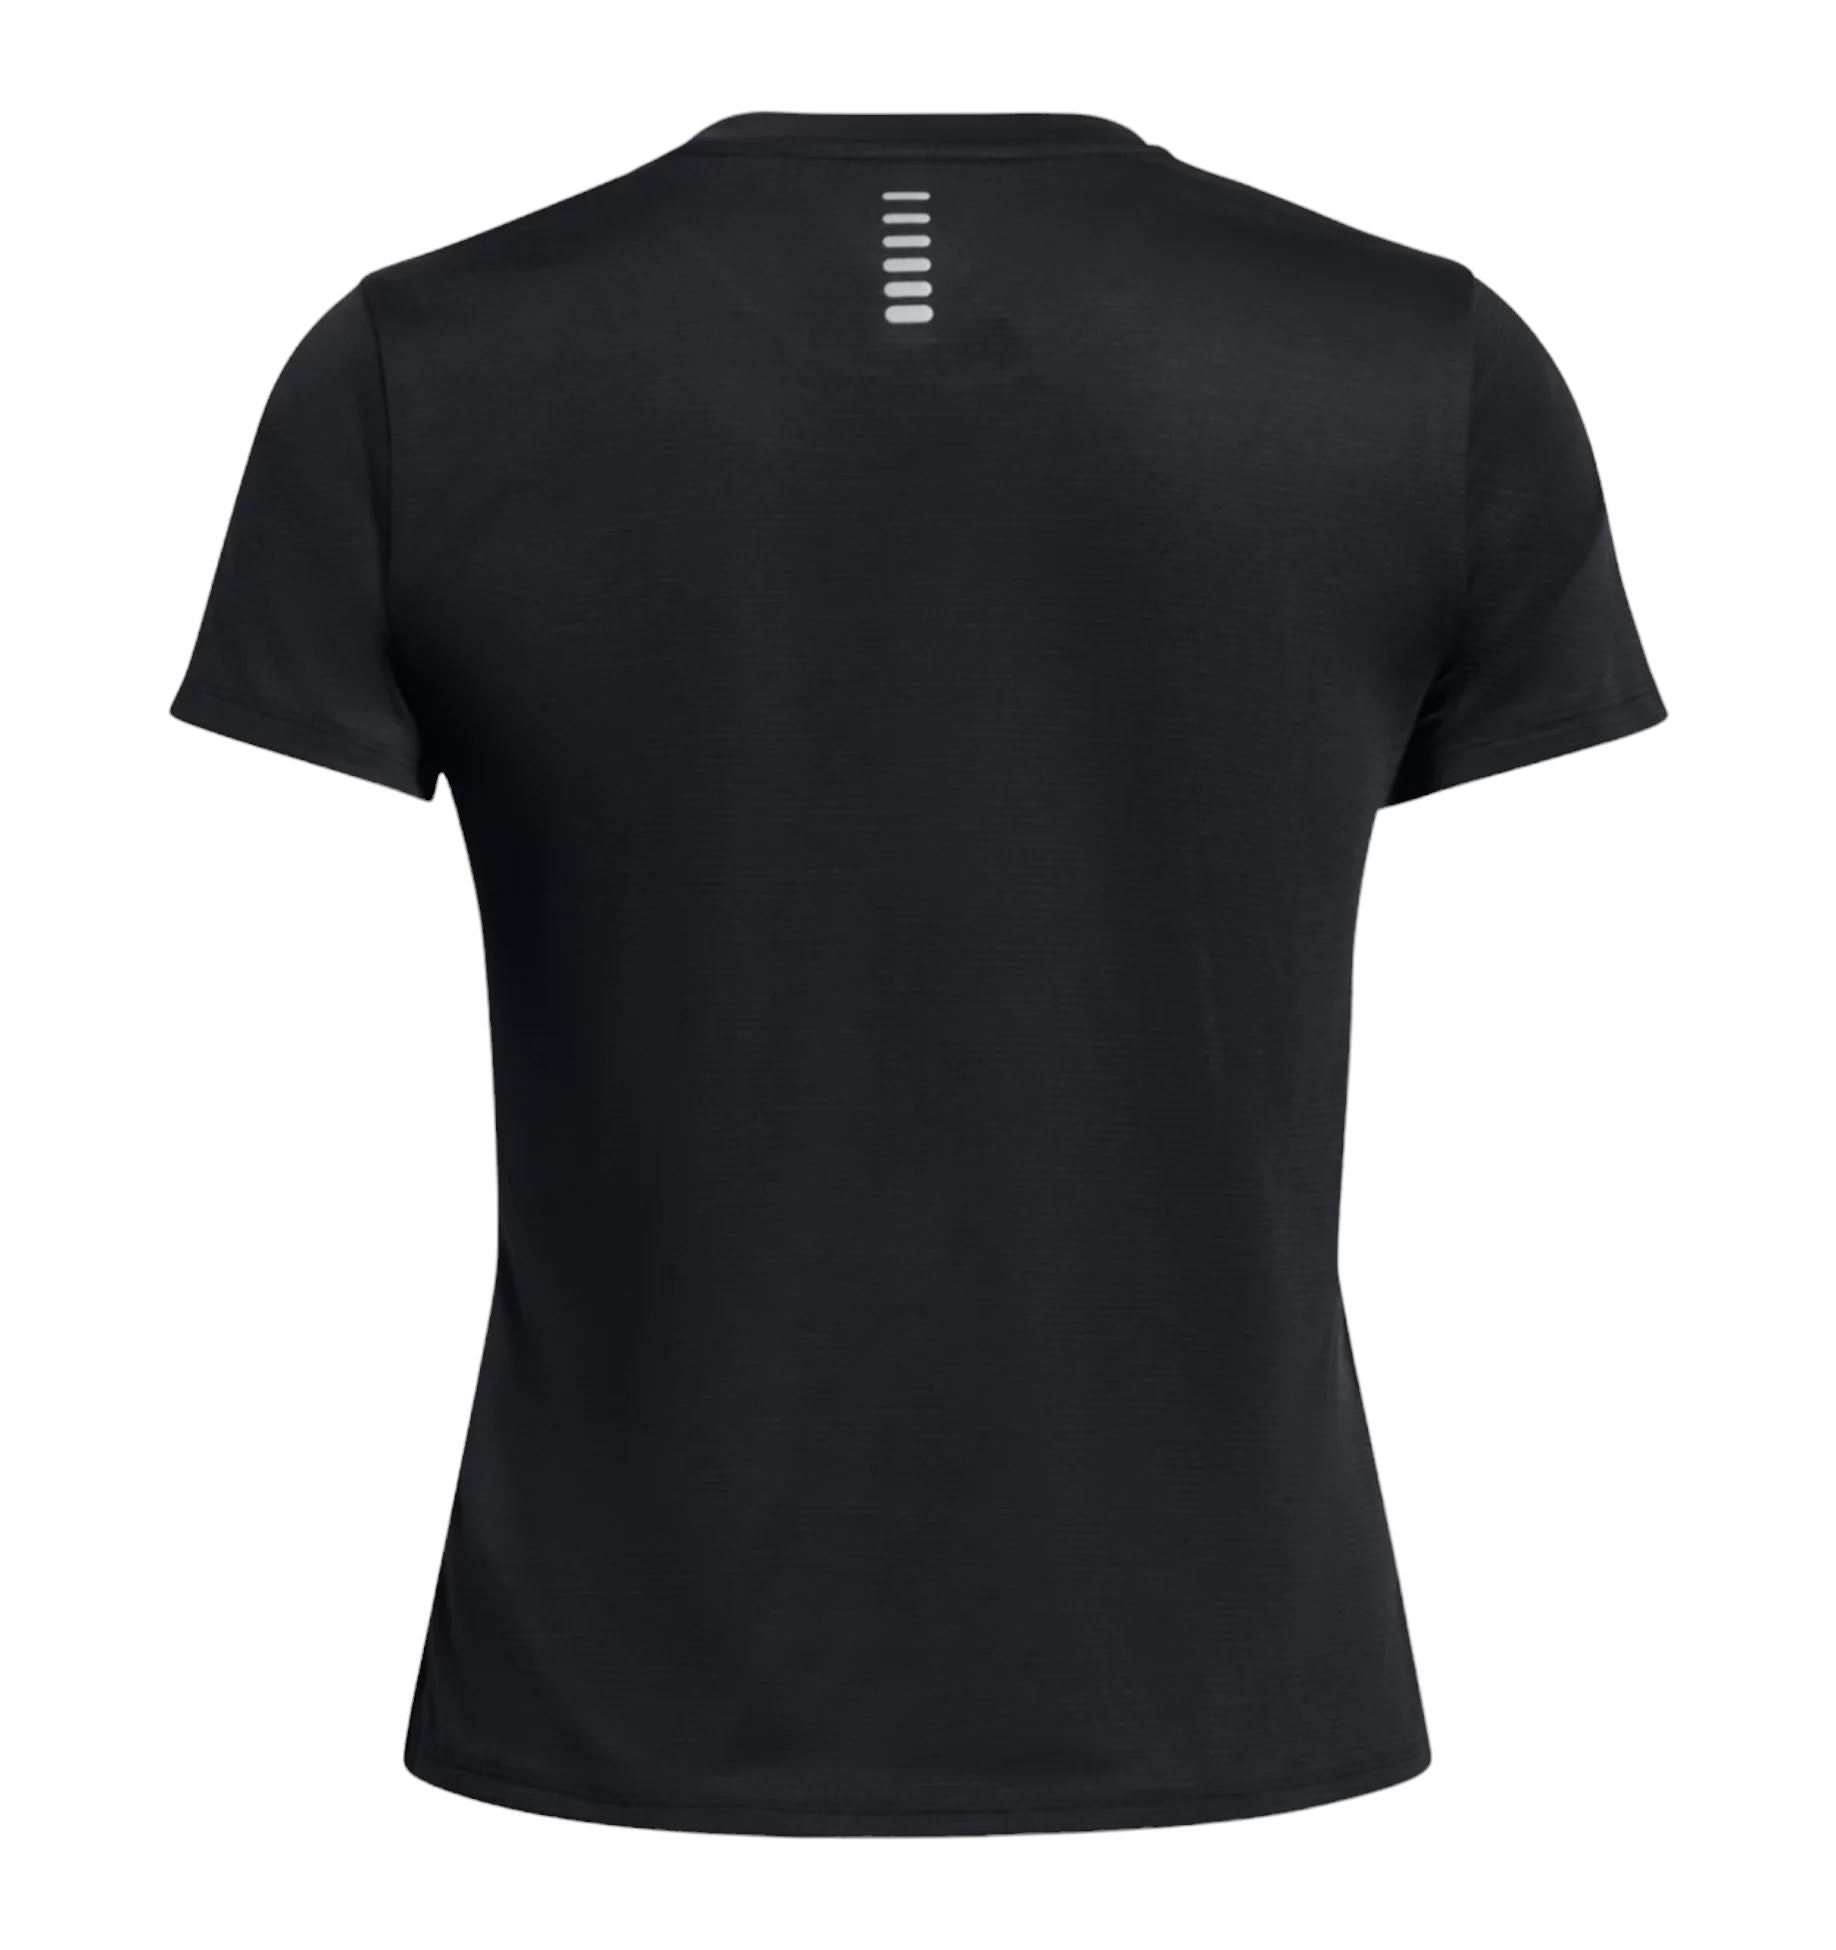 Women's Launch T-shirt Black/Reflective 